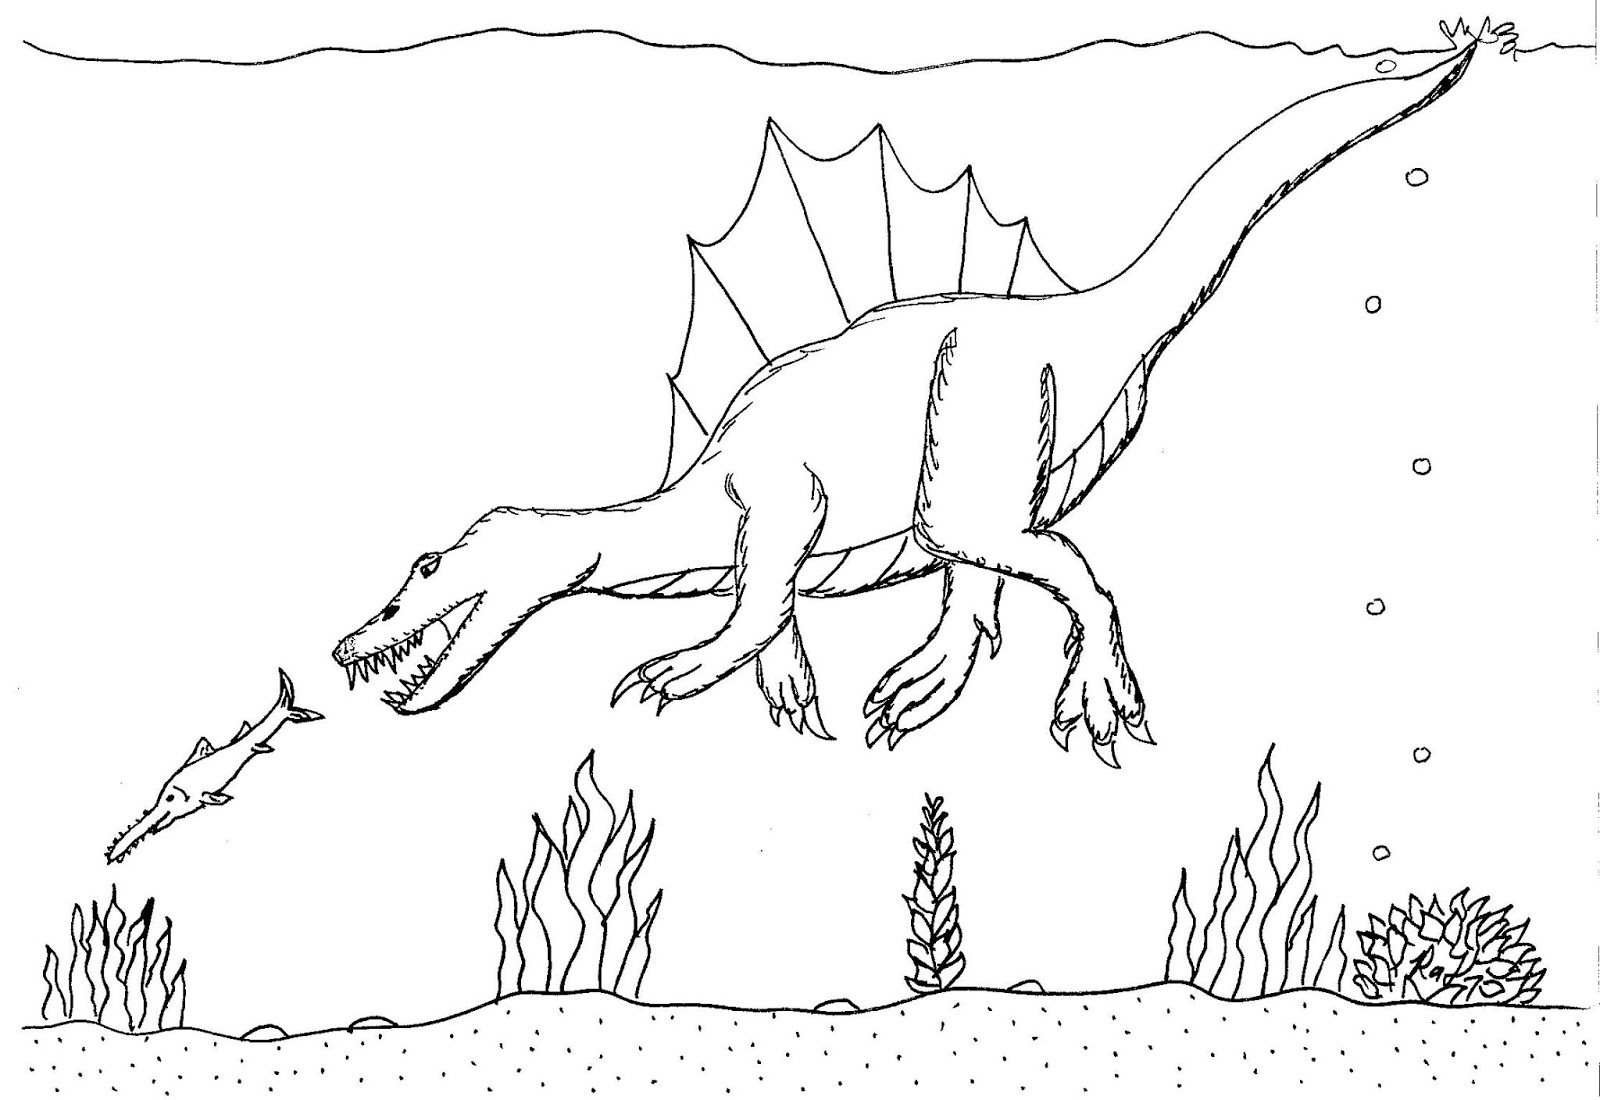 spinosaurus dinosaur coloring pages